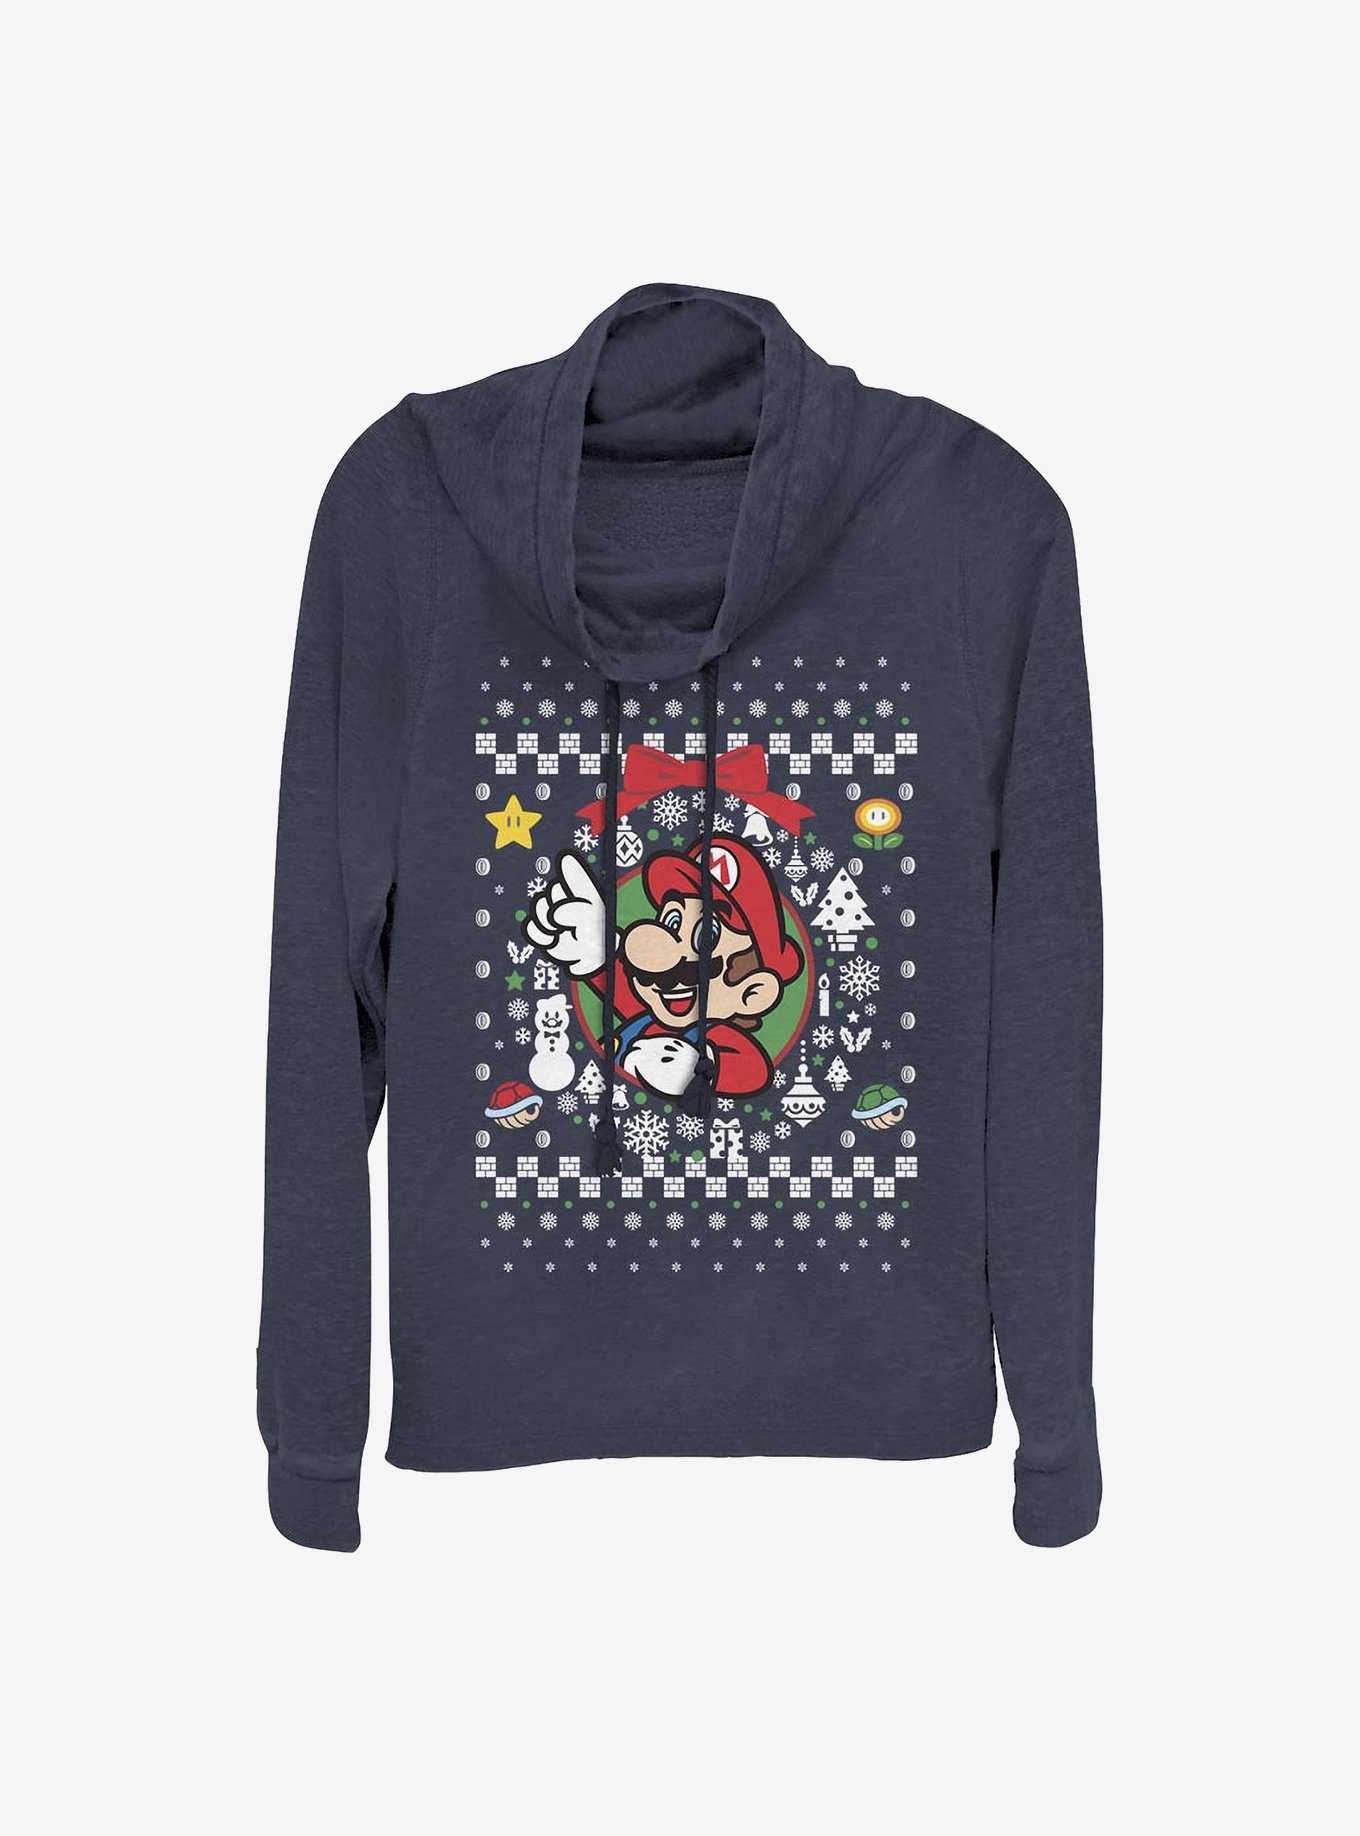 Super Mario Mario Wreath Ugly Christmas Sweater Cowl Neck Long-Sleeve Girls Top, , hi-res